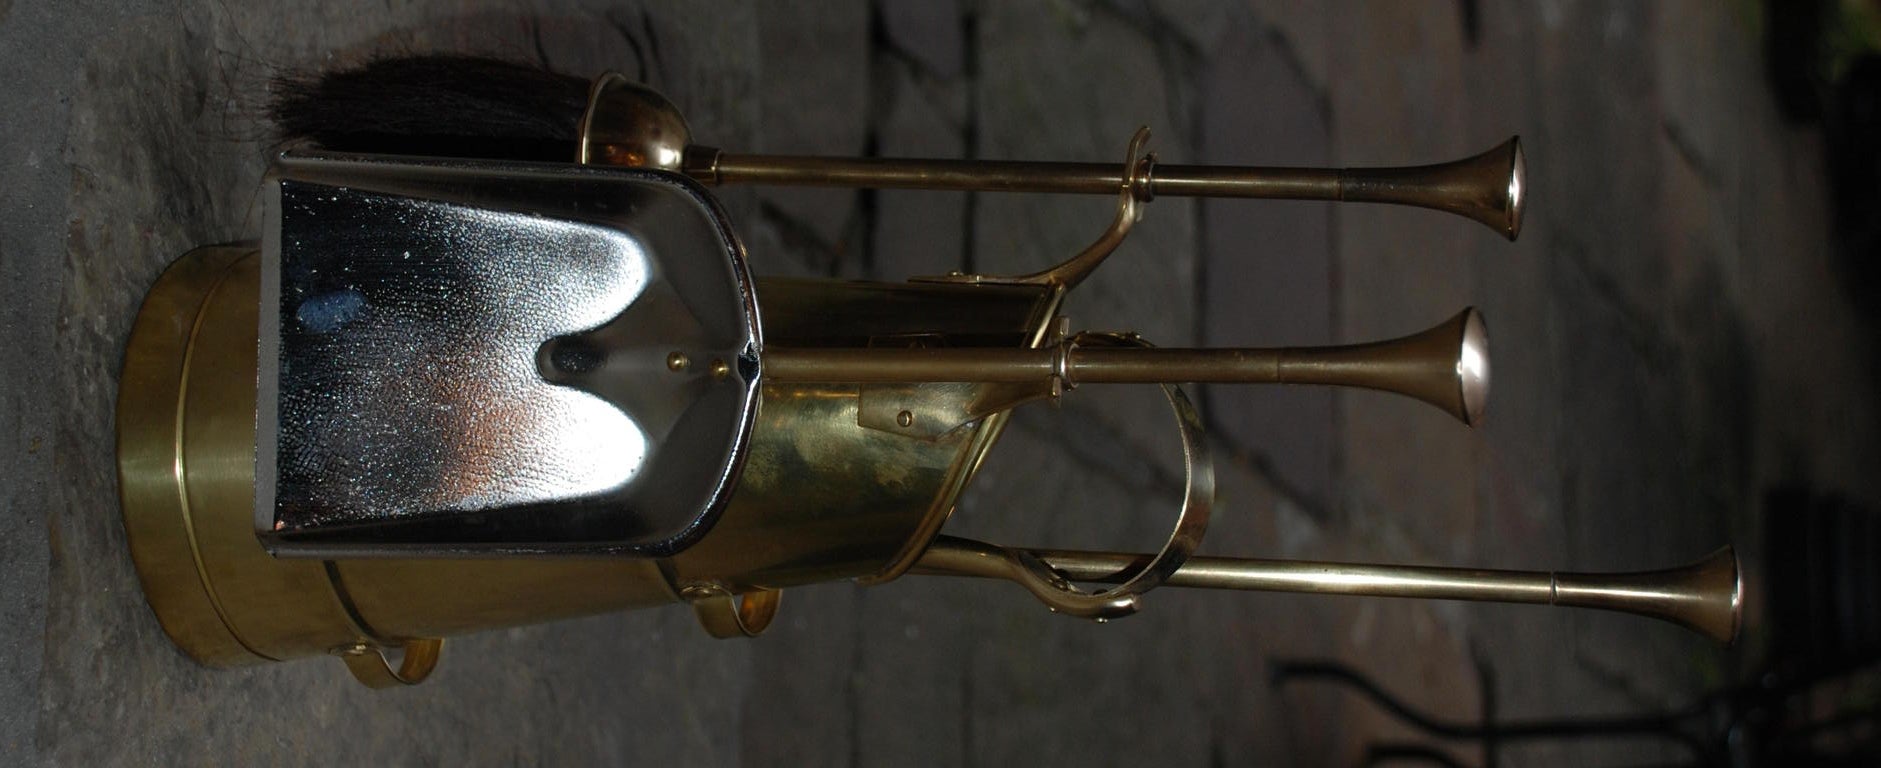 19th Century Antique English Brass Fireplace Tool Set, c. 1890s-1900s